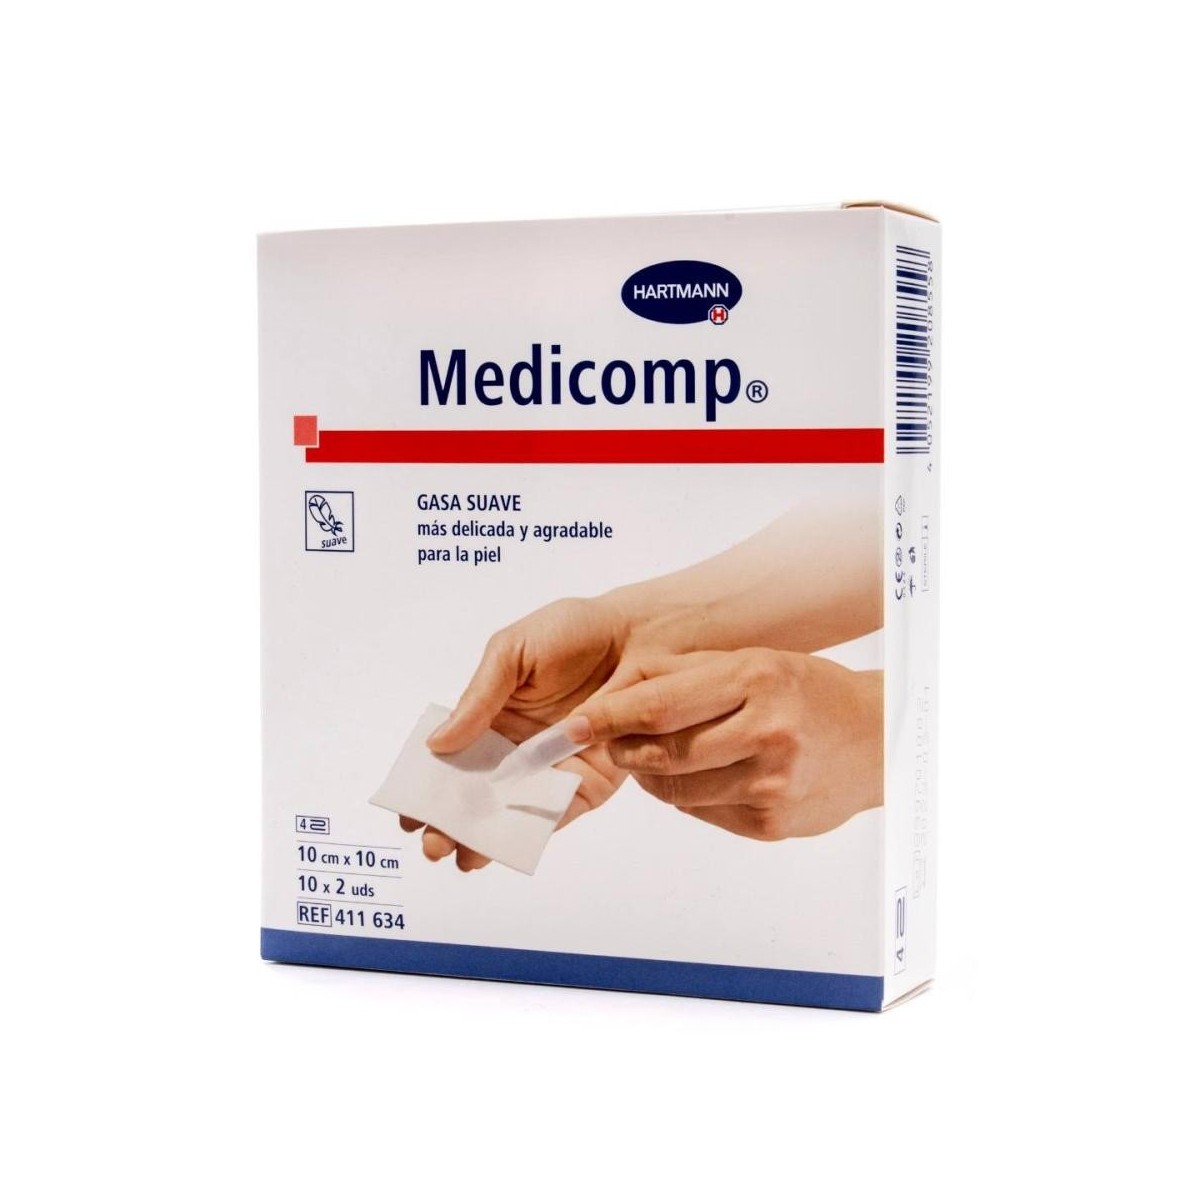 Medicomp gasa suave 10 Cmx10 cm 10 U